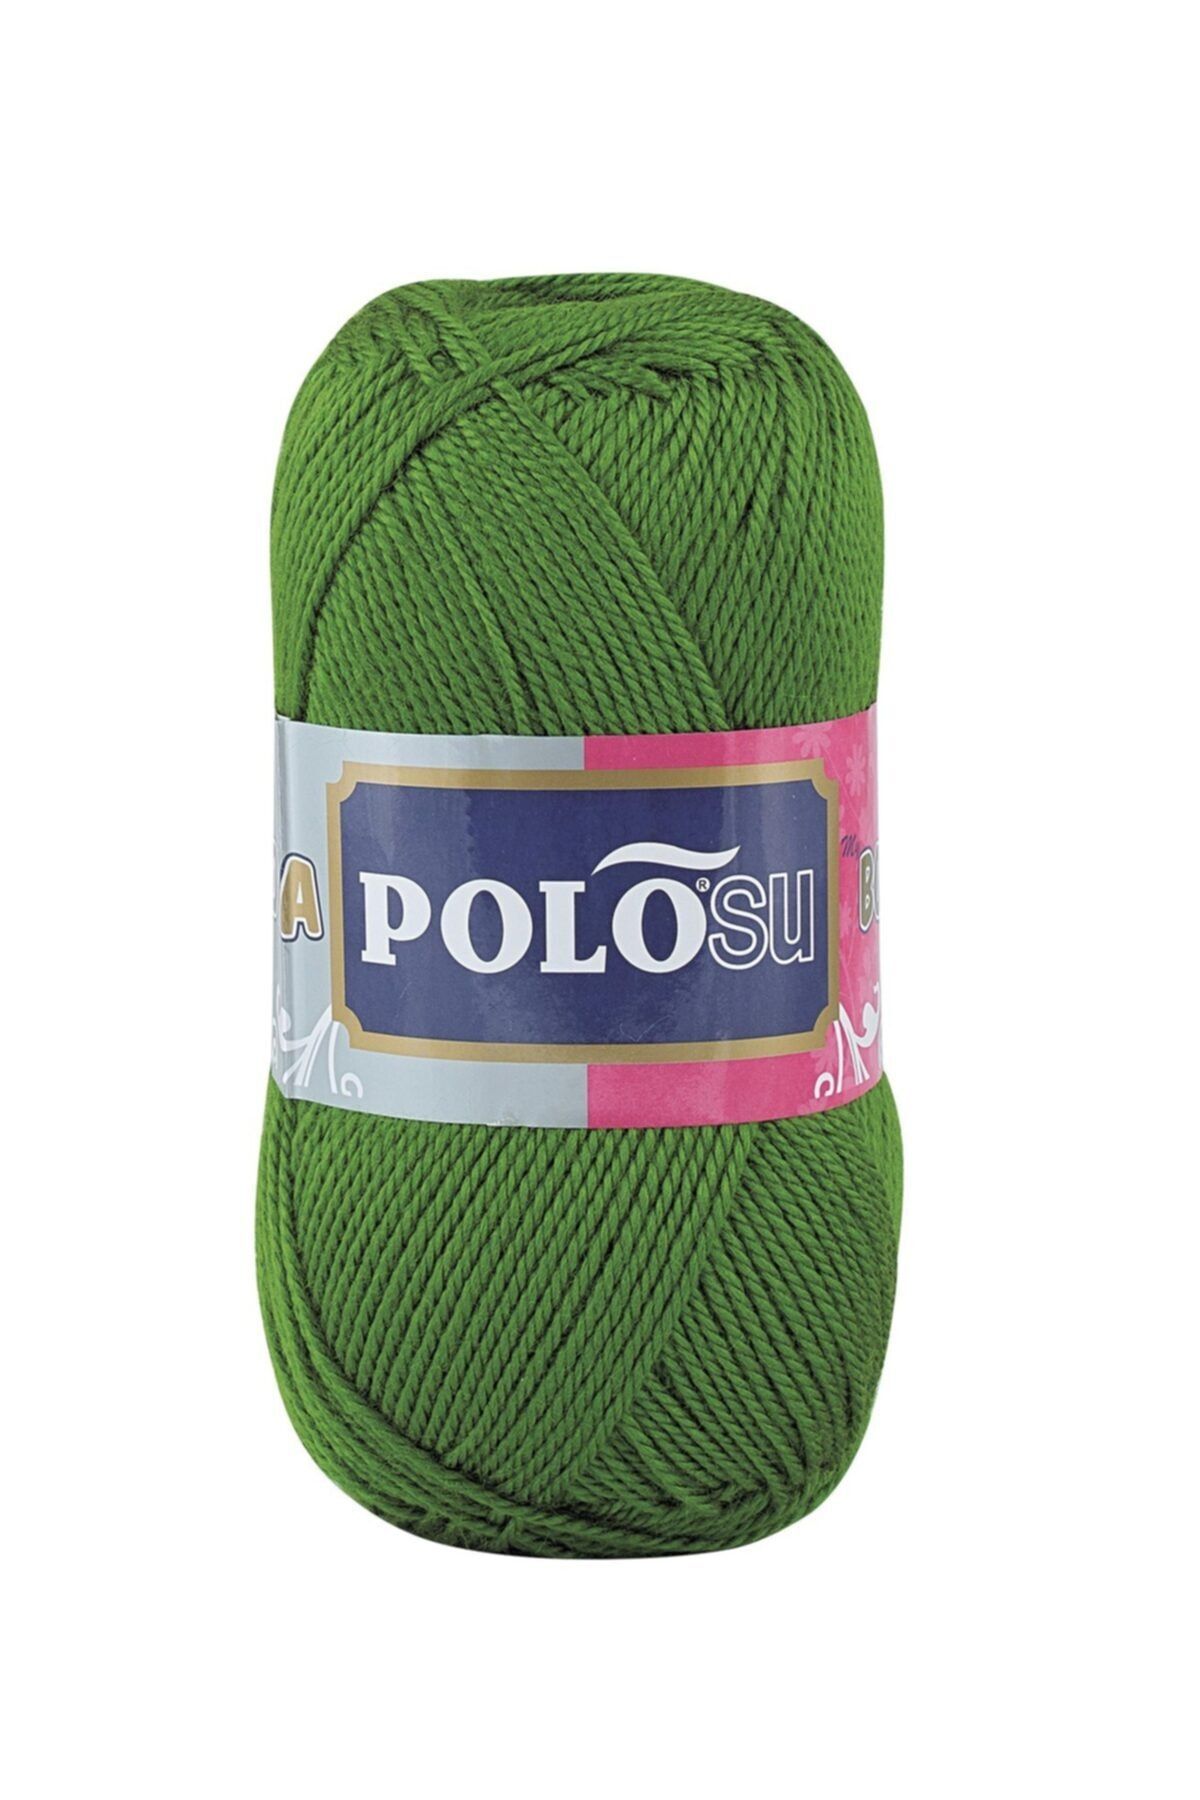 Polosu Lüks Patiklik - El Örgü Patik Ipi - Renk: 344 - Haki Yeşil